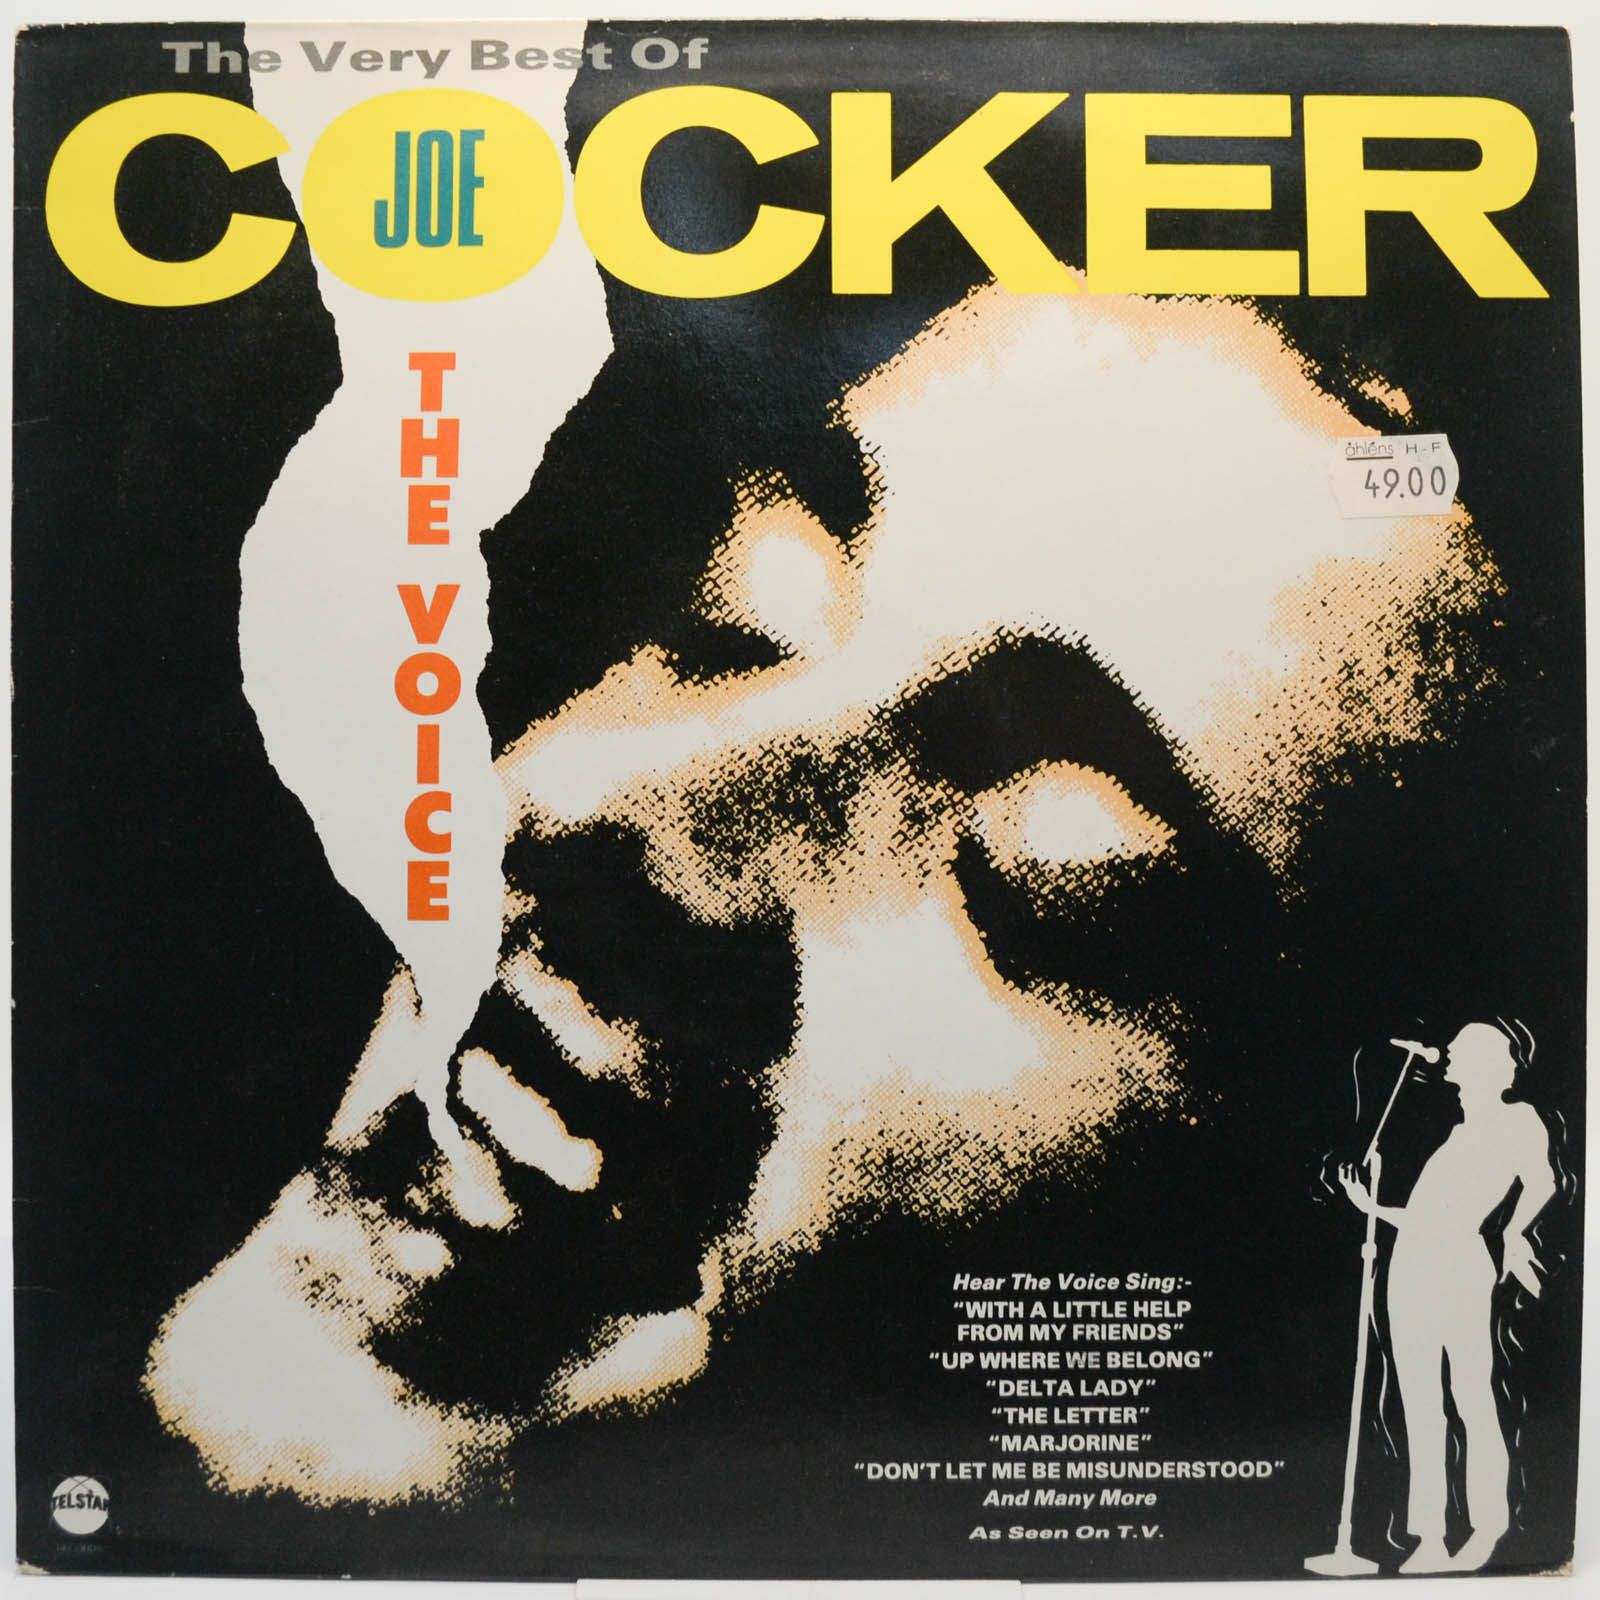 Joe Cocker — The Very Best Of Joe Cocker - The Voice (UK), 1986